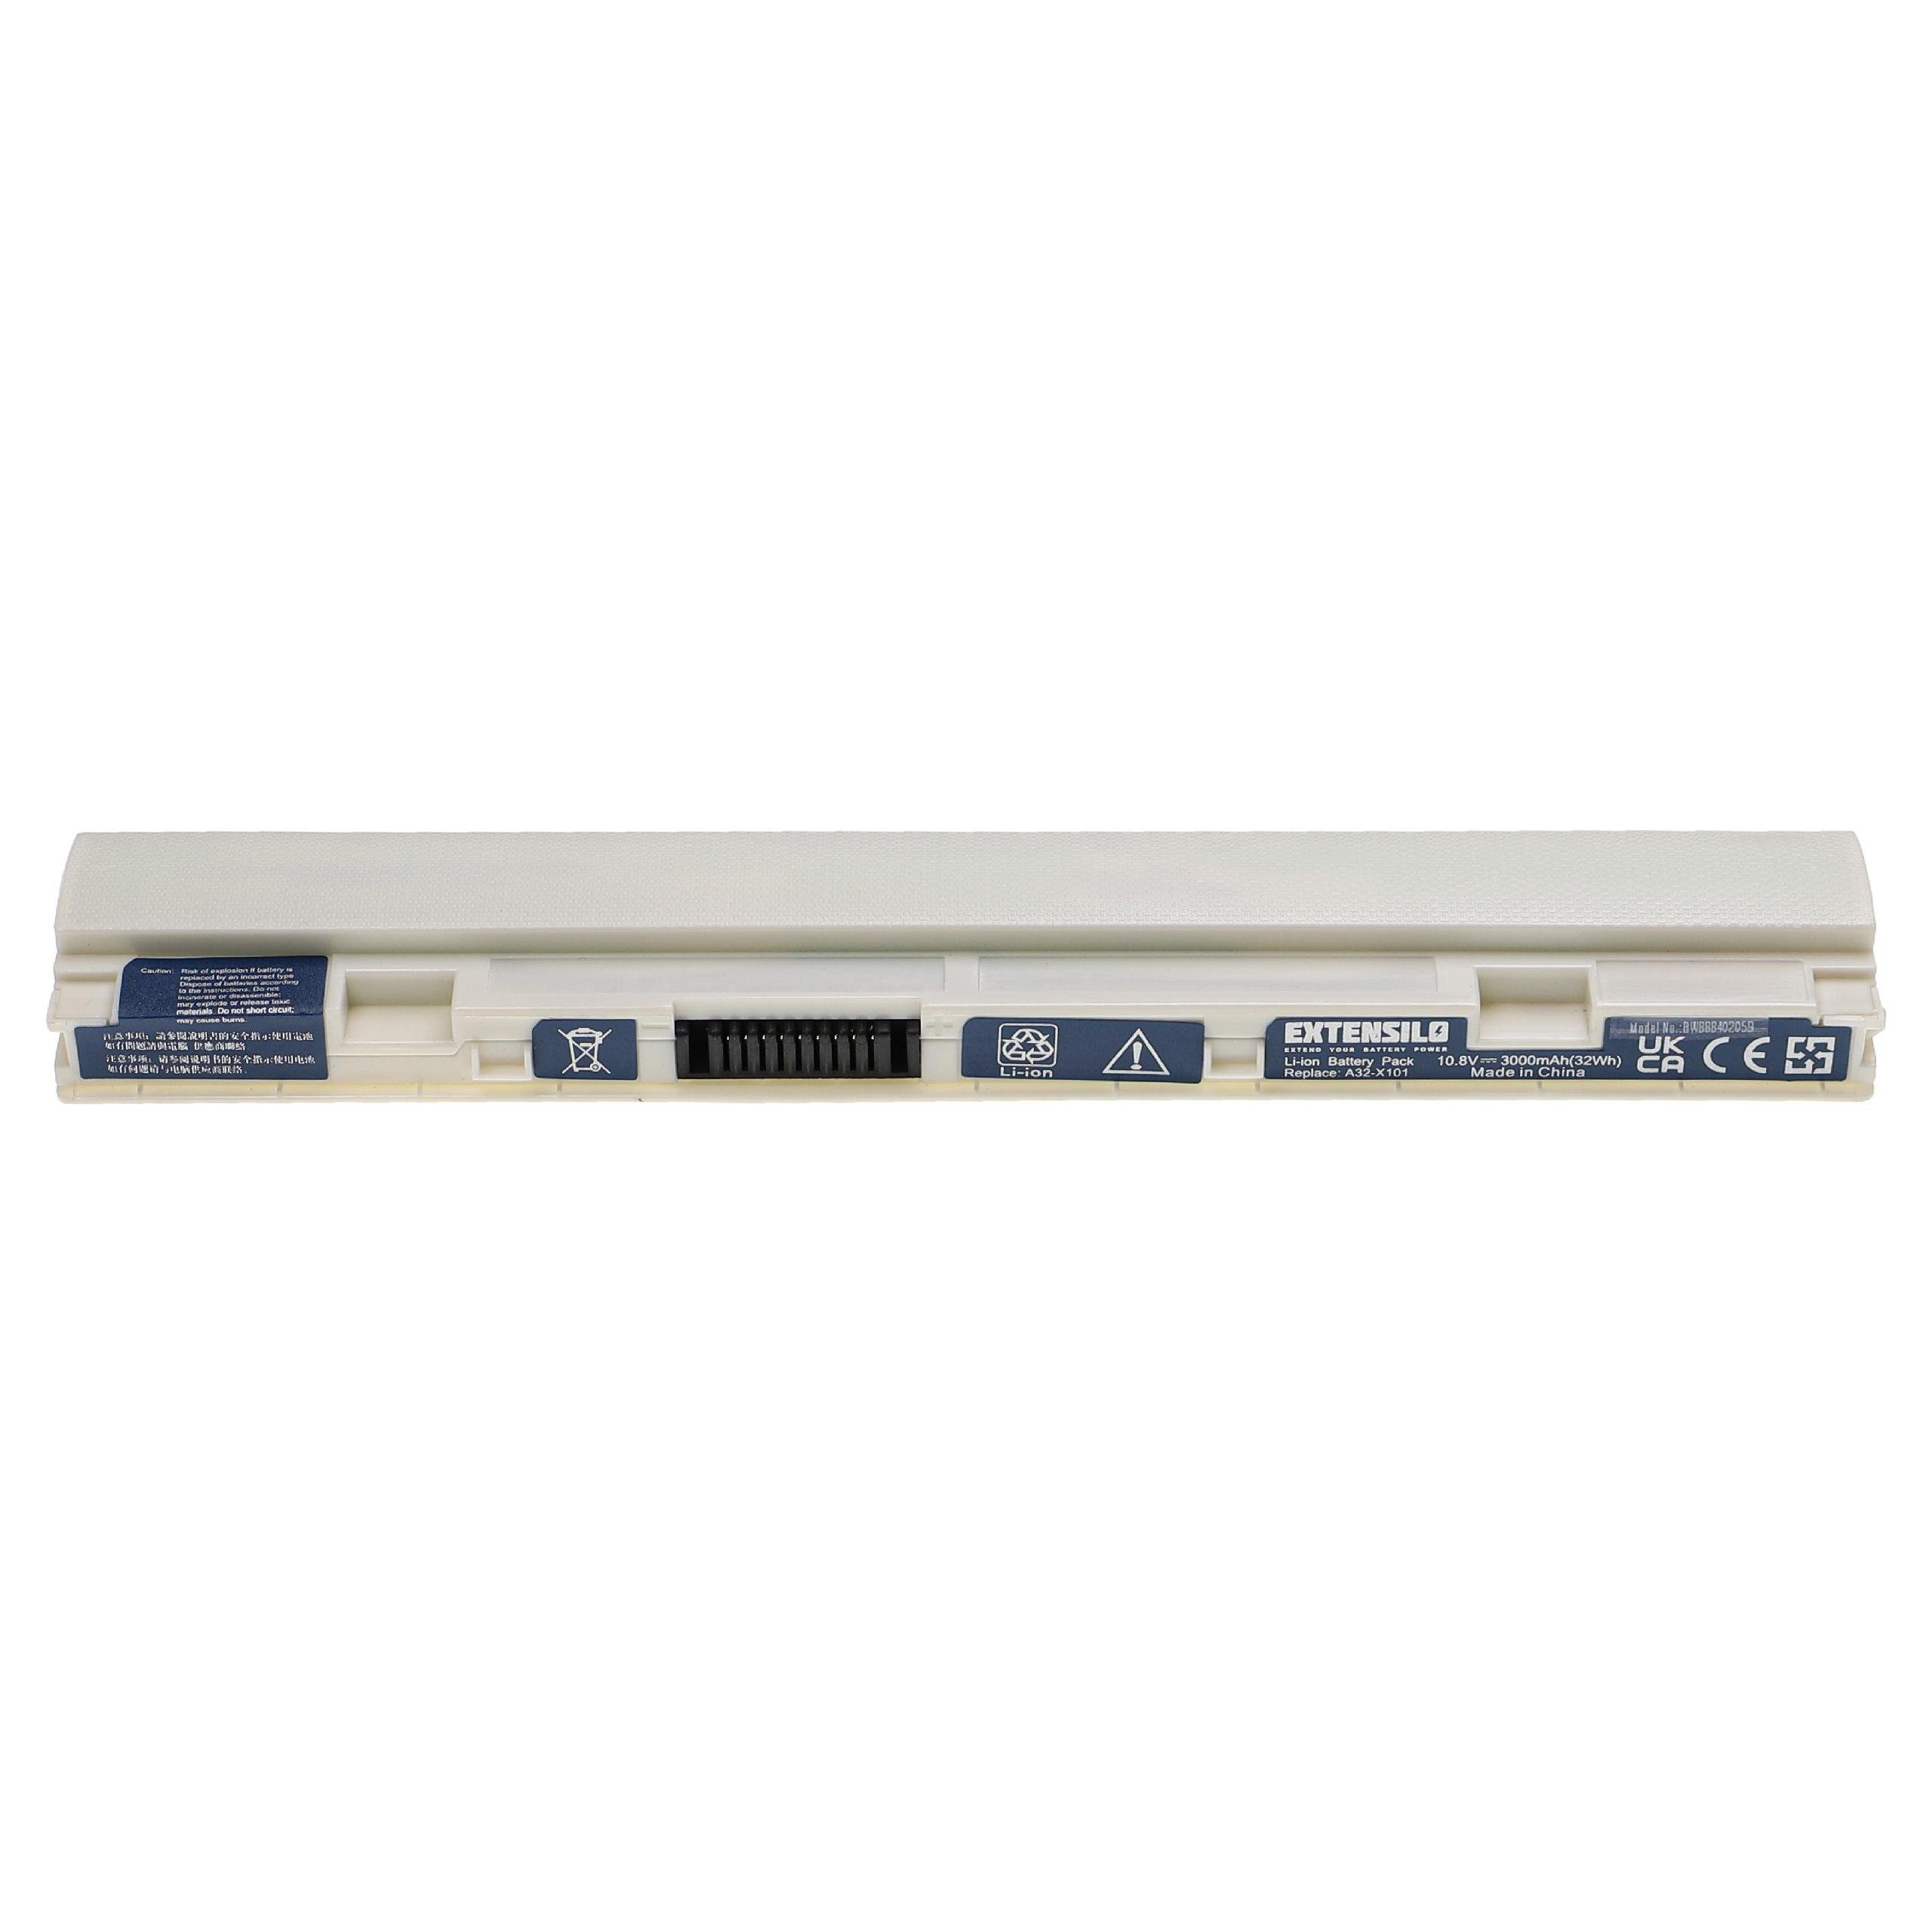 Extensilo kompatibel mit Asus Eee PC X101, X101CH, X101C, R11CX, X101H Laptop-Akku Li-Ion 3000 mAh (10,8 V) | Akkus und PowerBanks